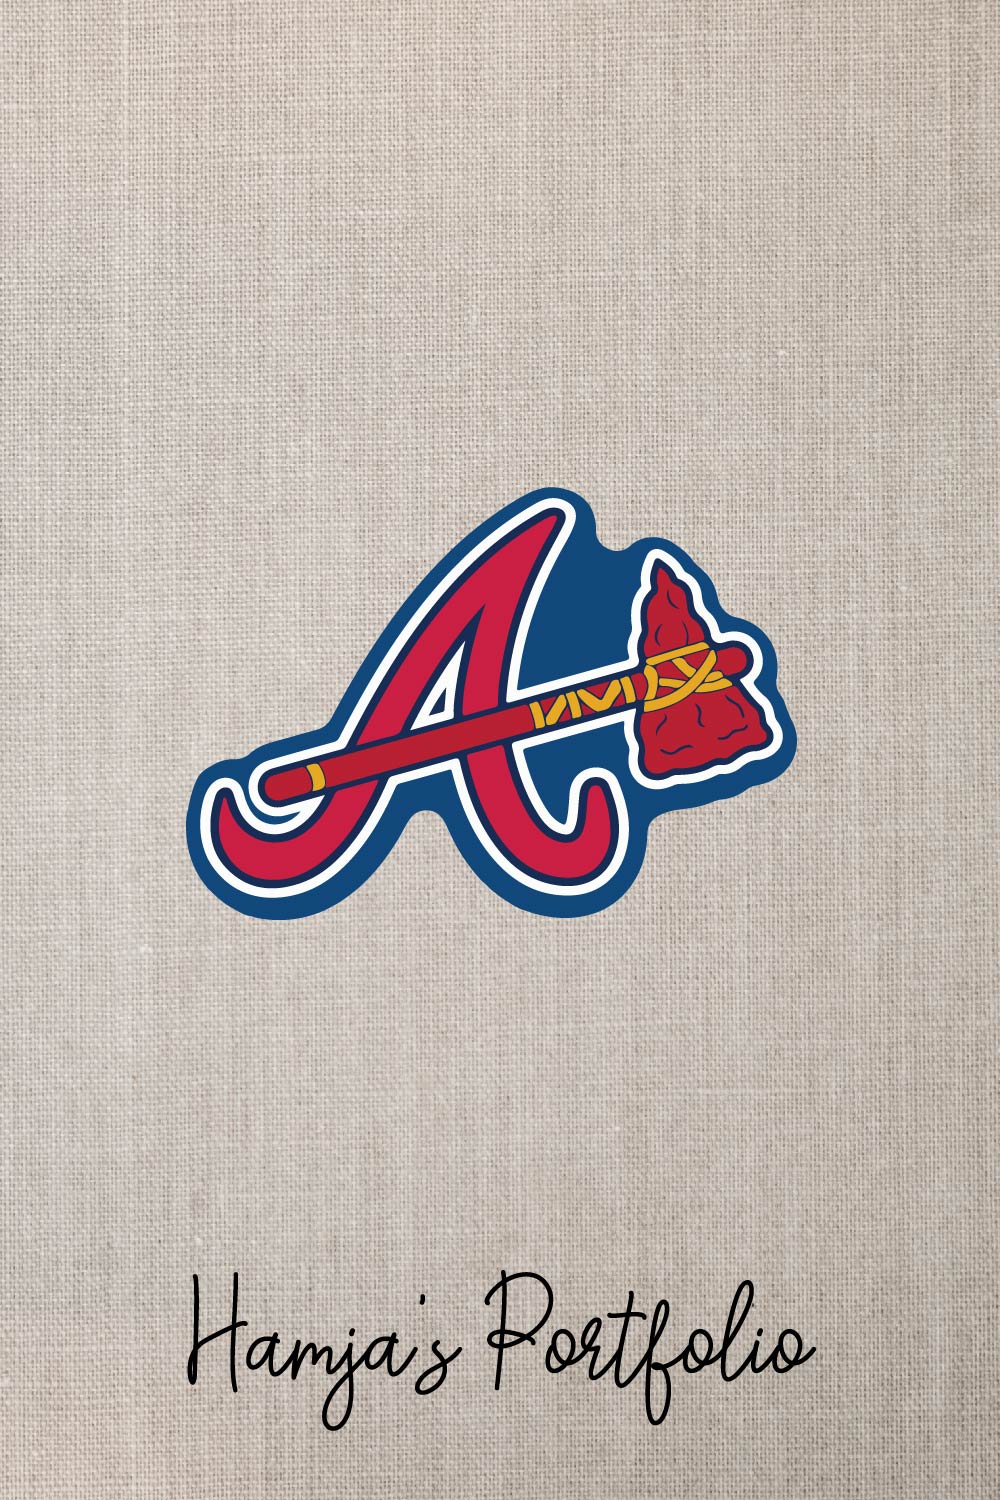 Atlanta Braves Logo Vector Set pinterest preview image.